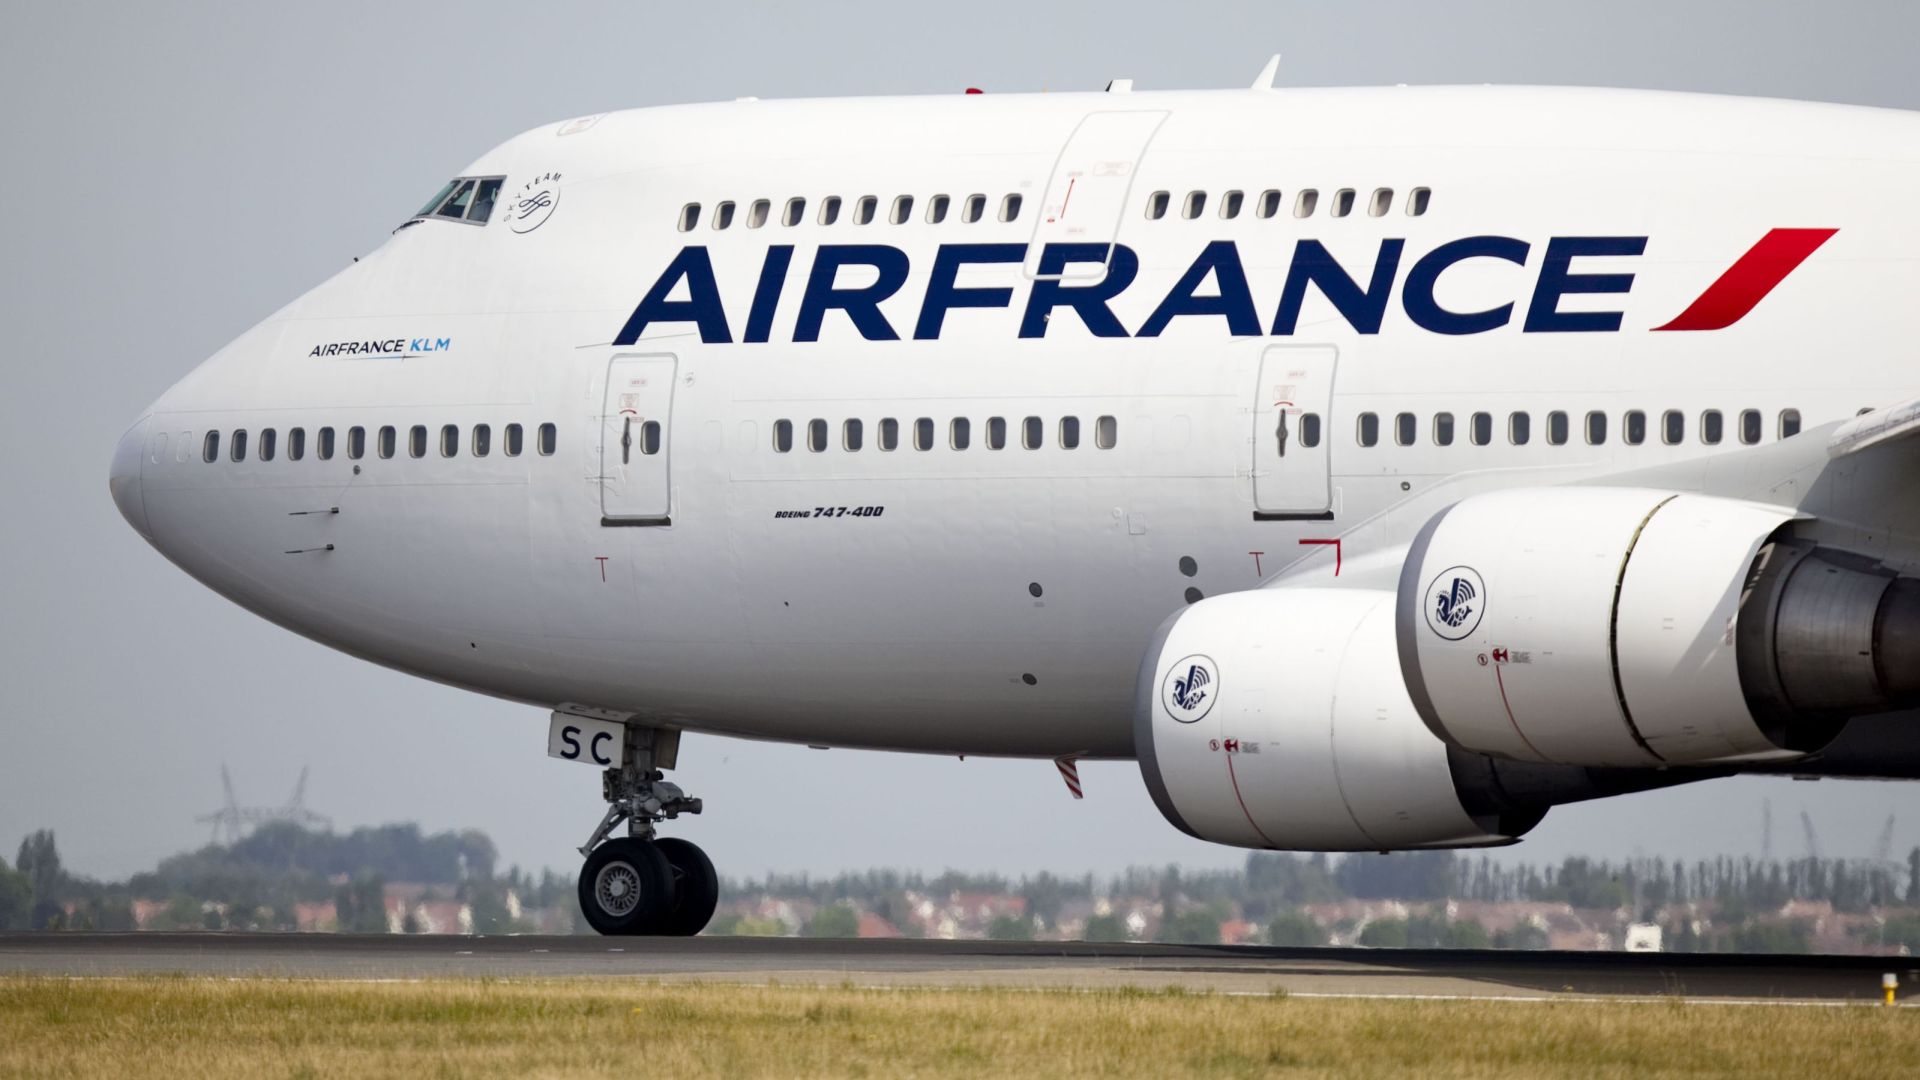 H Air France θα καταργήσει 7.580 θέσεις εργασίας